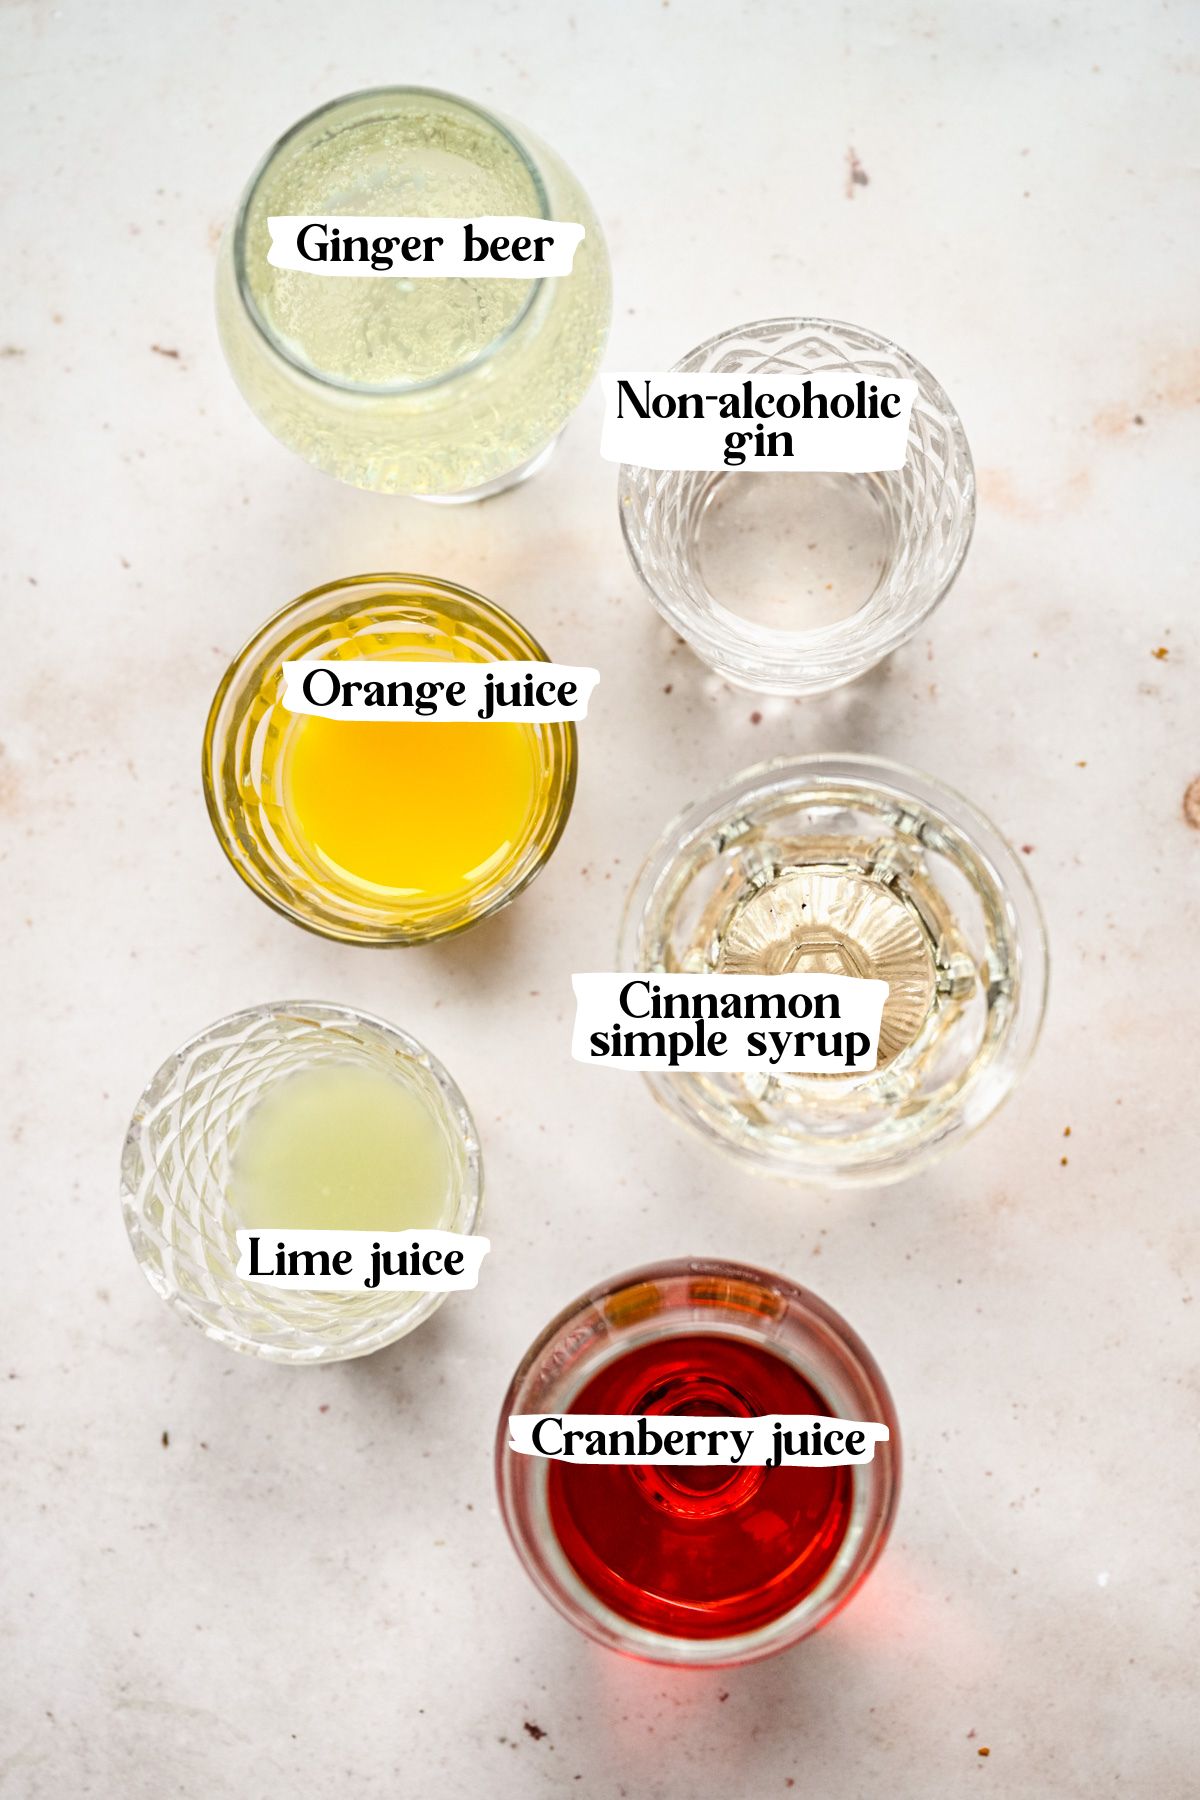 Cranberry mocktail ingredients including lime juice and orange juice.